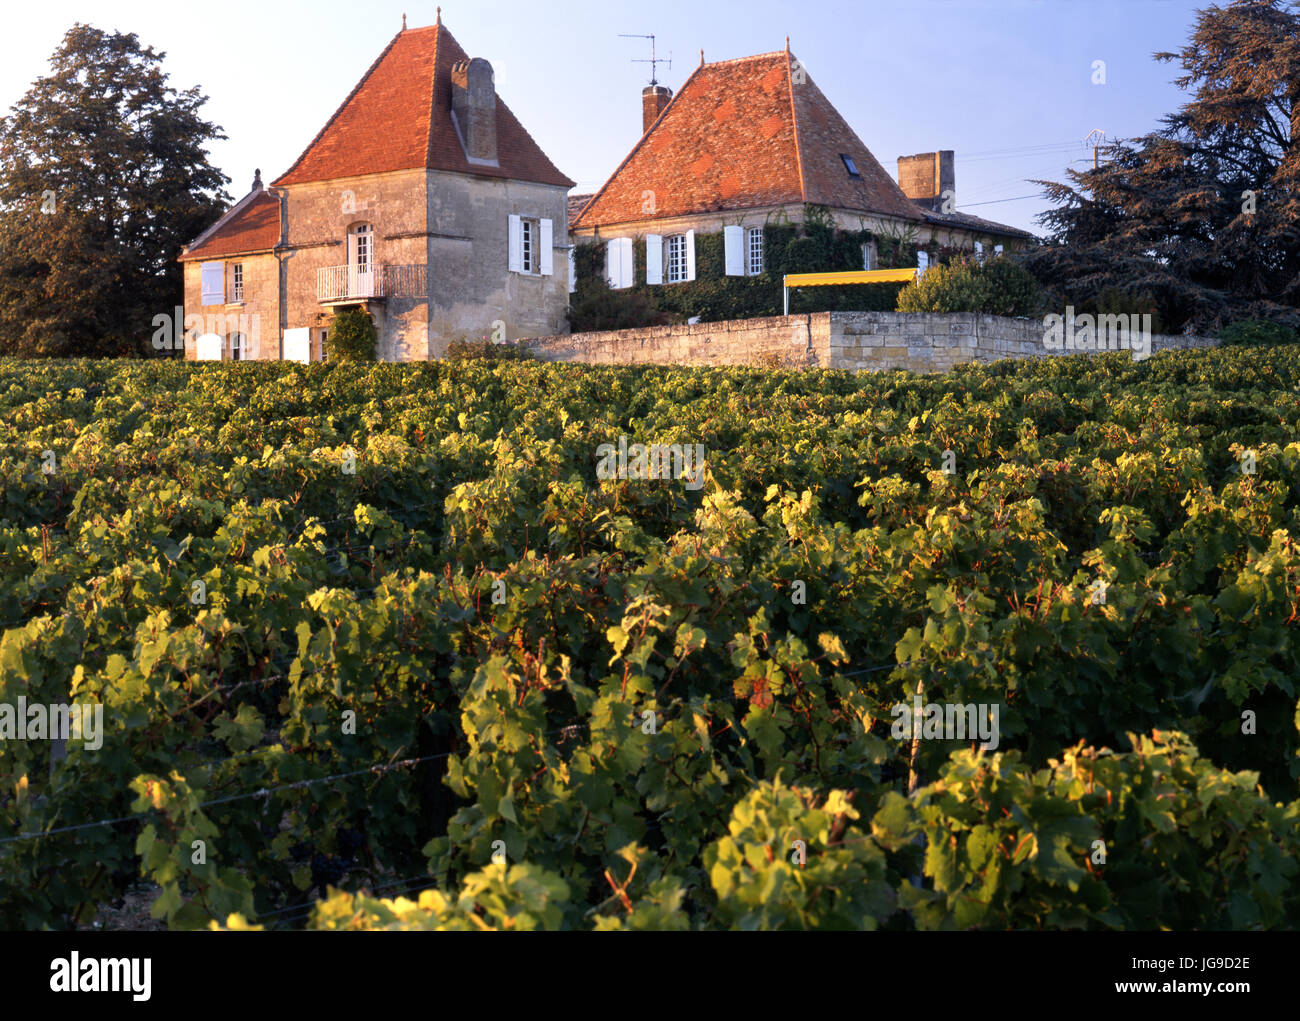 Chateau Belair-Monange vineyard and house of Chateau Belair-Monange at sunset, St-Émilion, Gironde, Bordeaux France Stock Photo